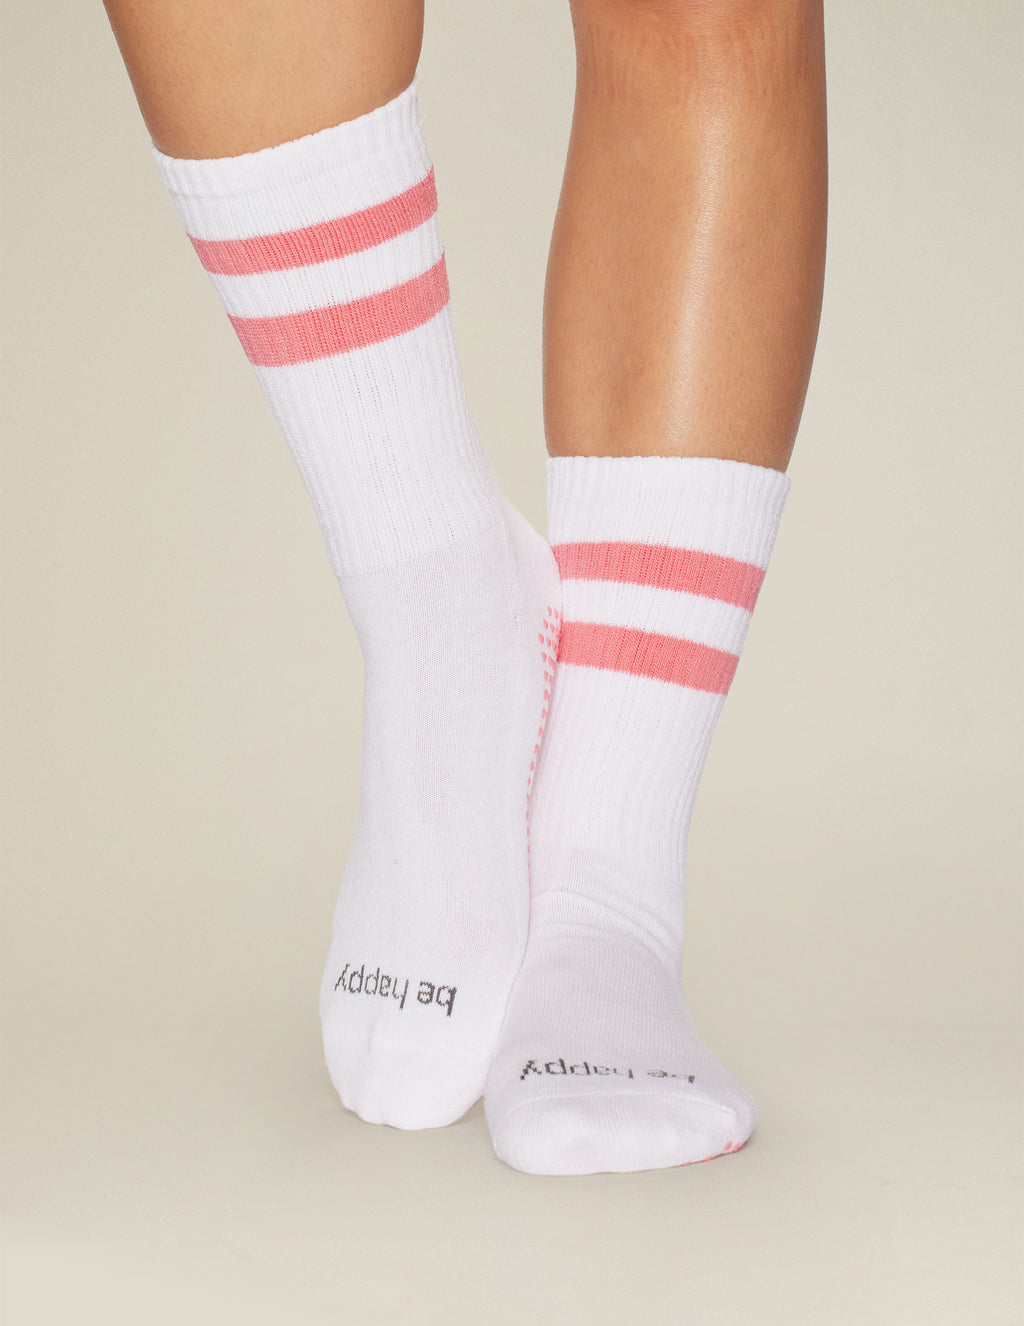 Women's Grip Socks, Unisex Grip Socks, Bags, Headband